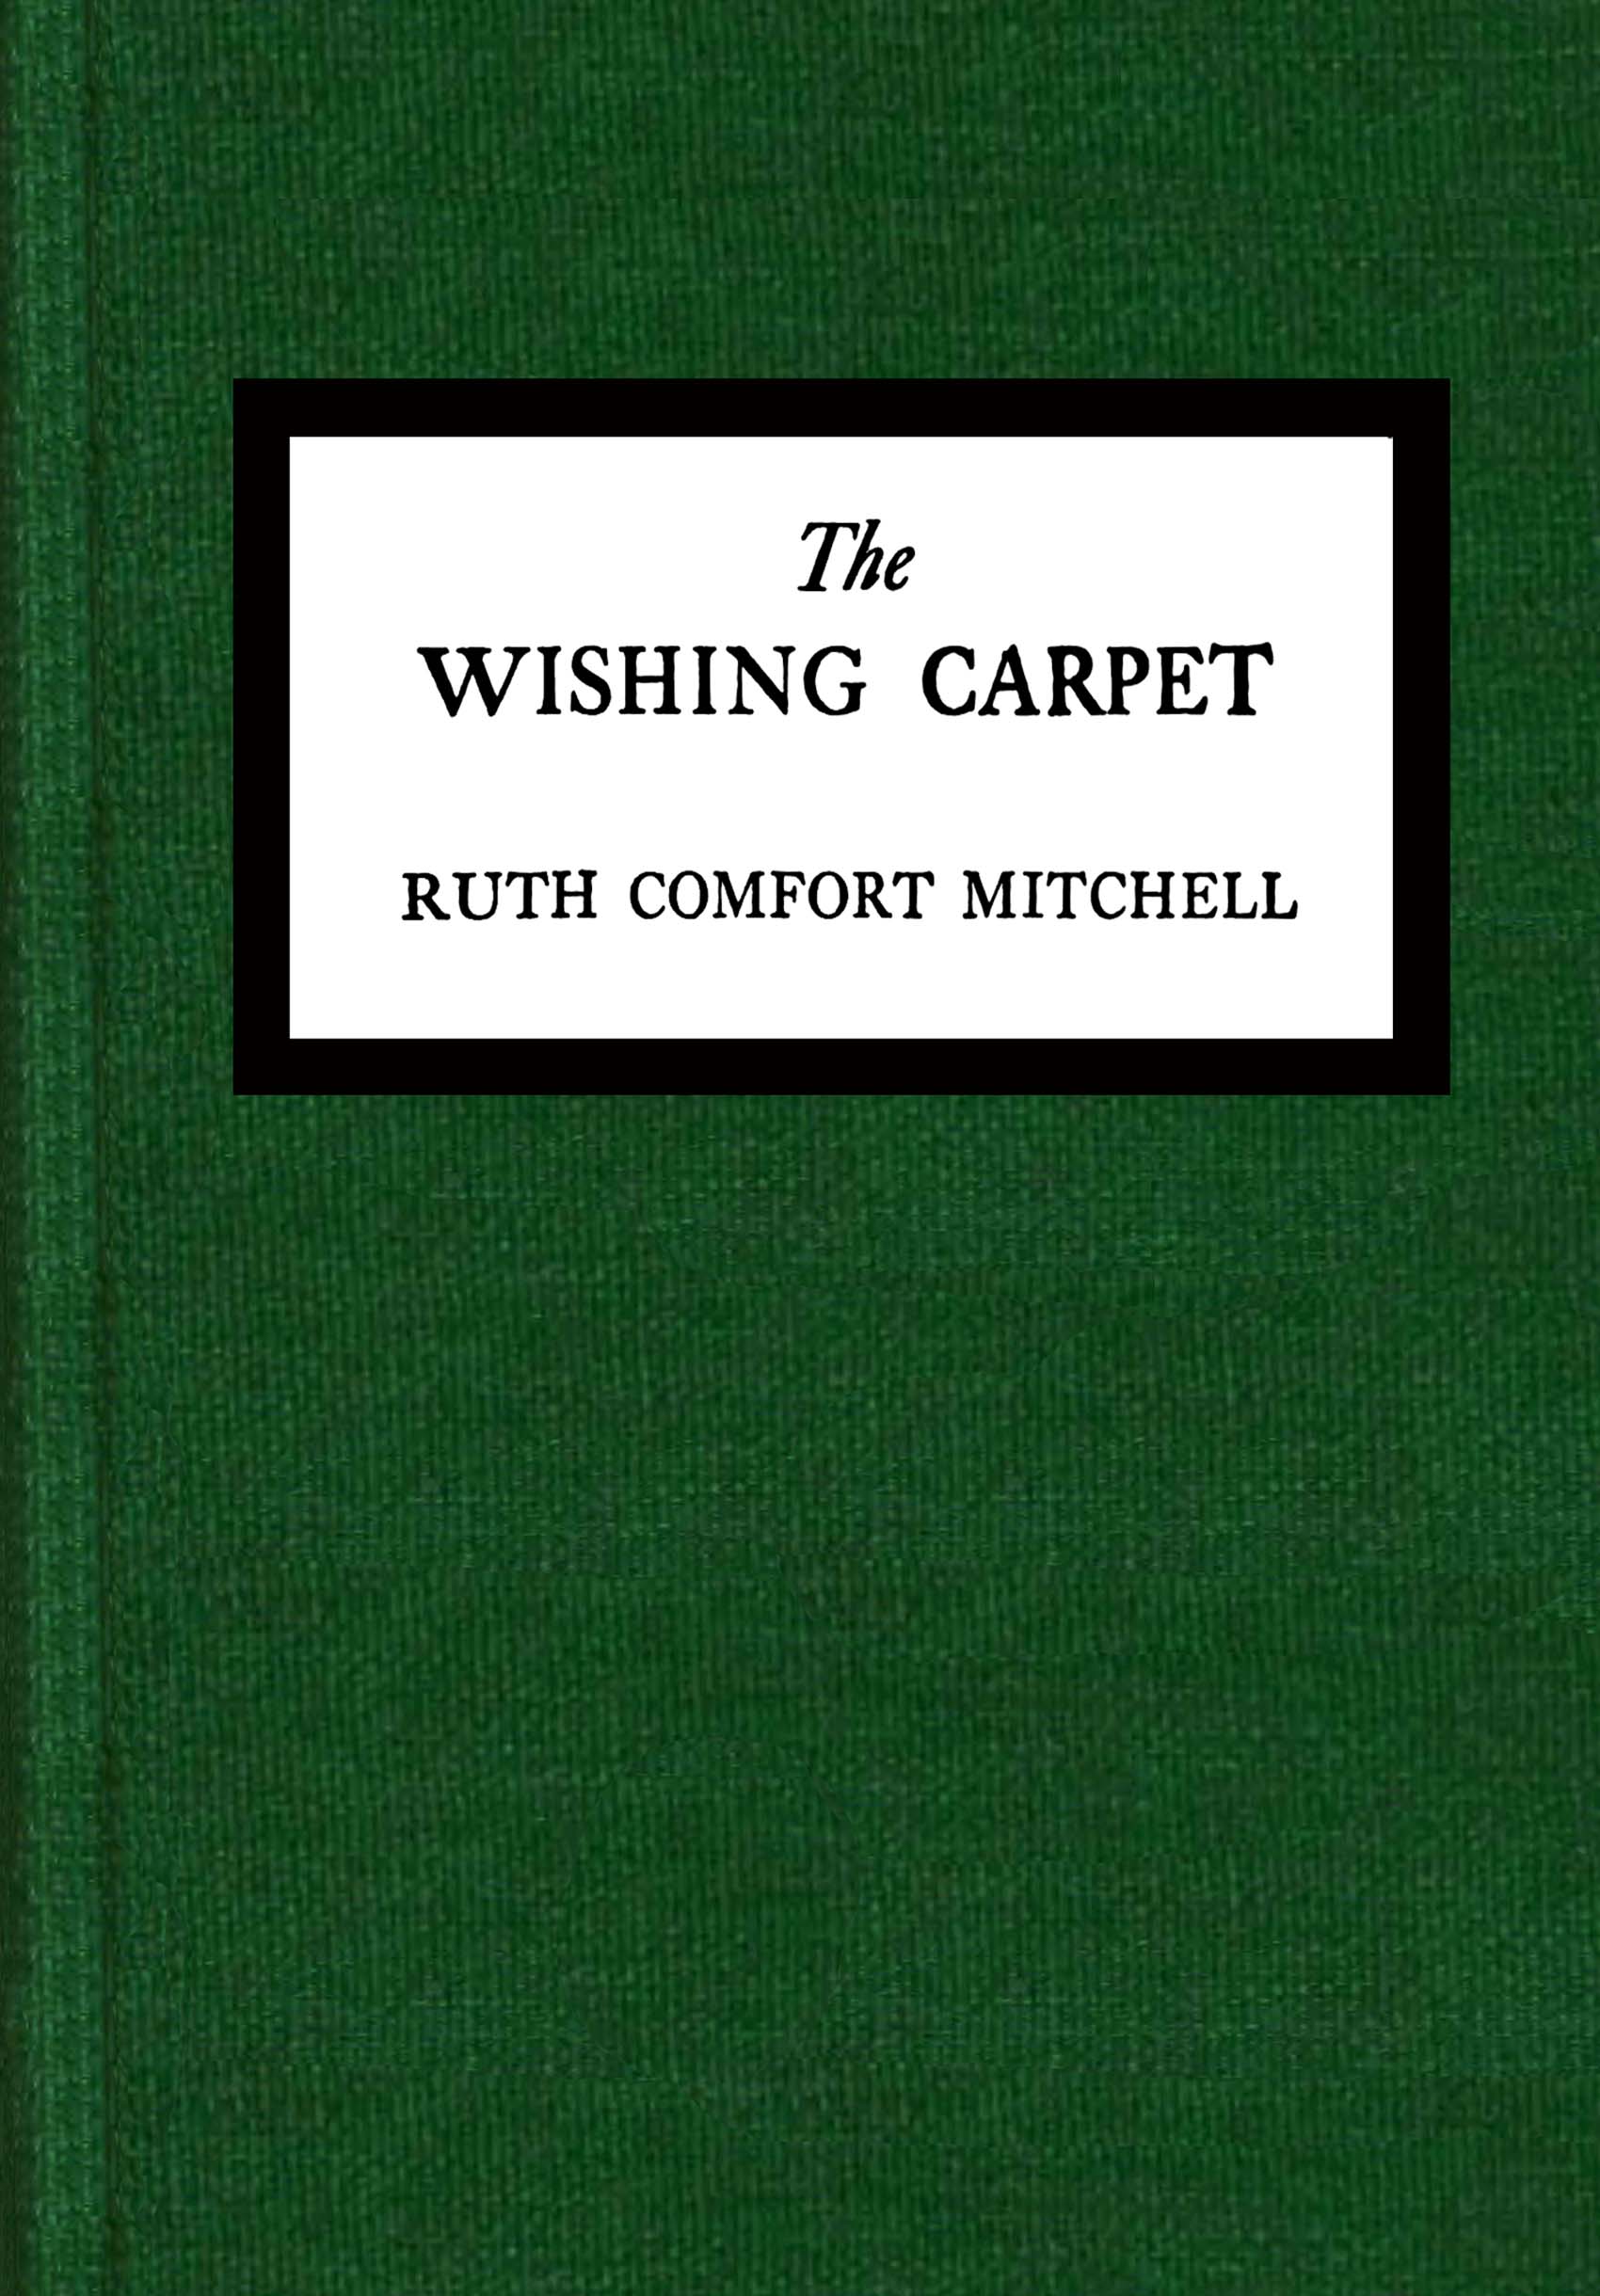 The Wishing Carpet